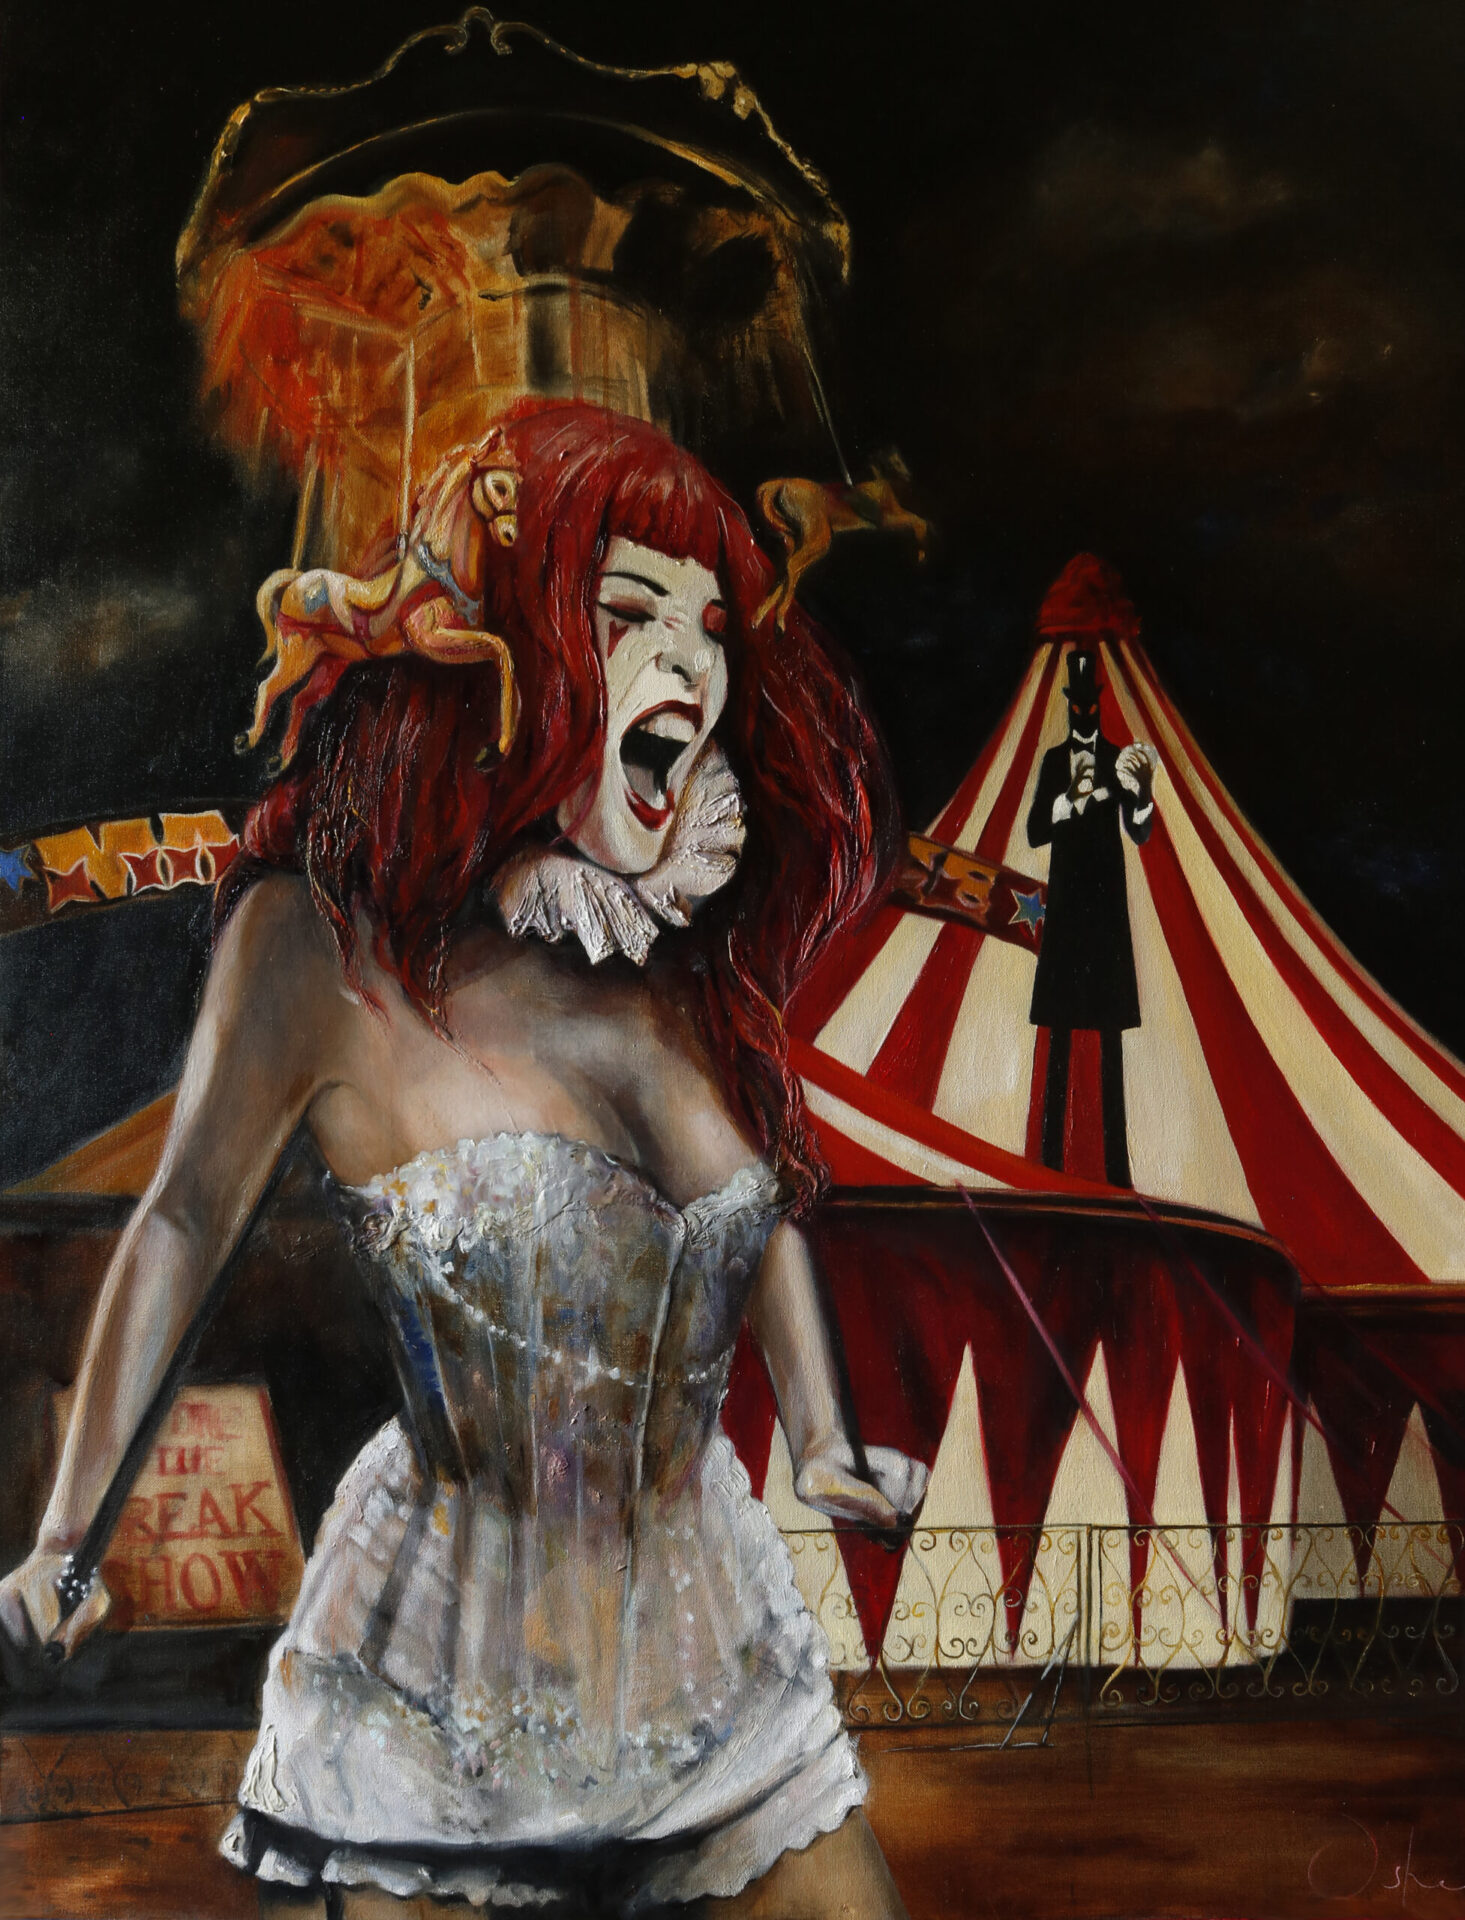 "Freak Show" - Circus painting